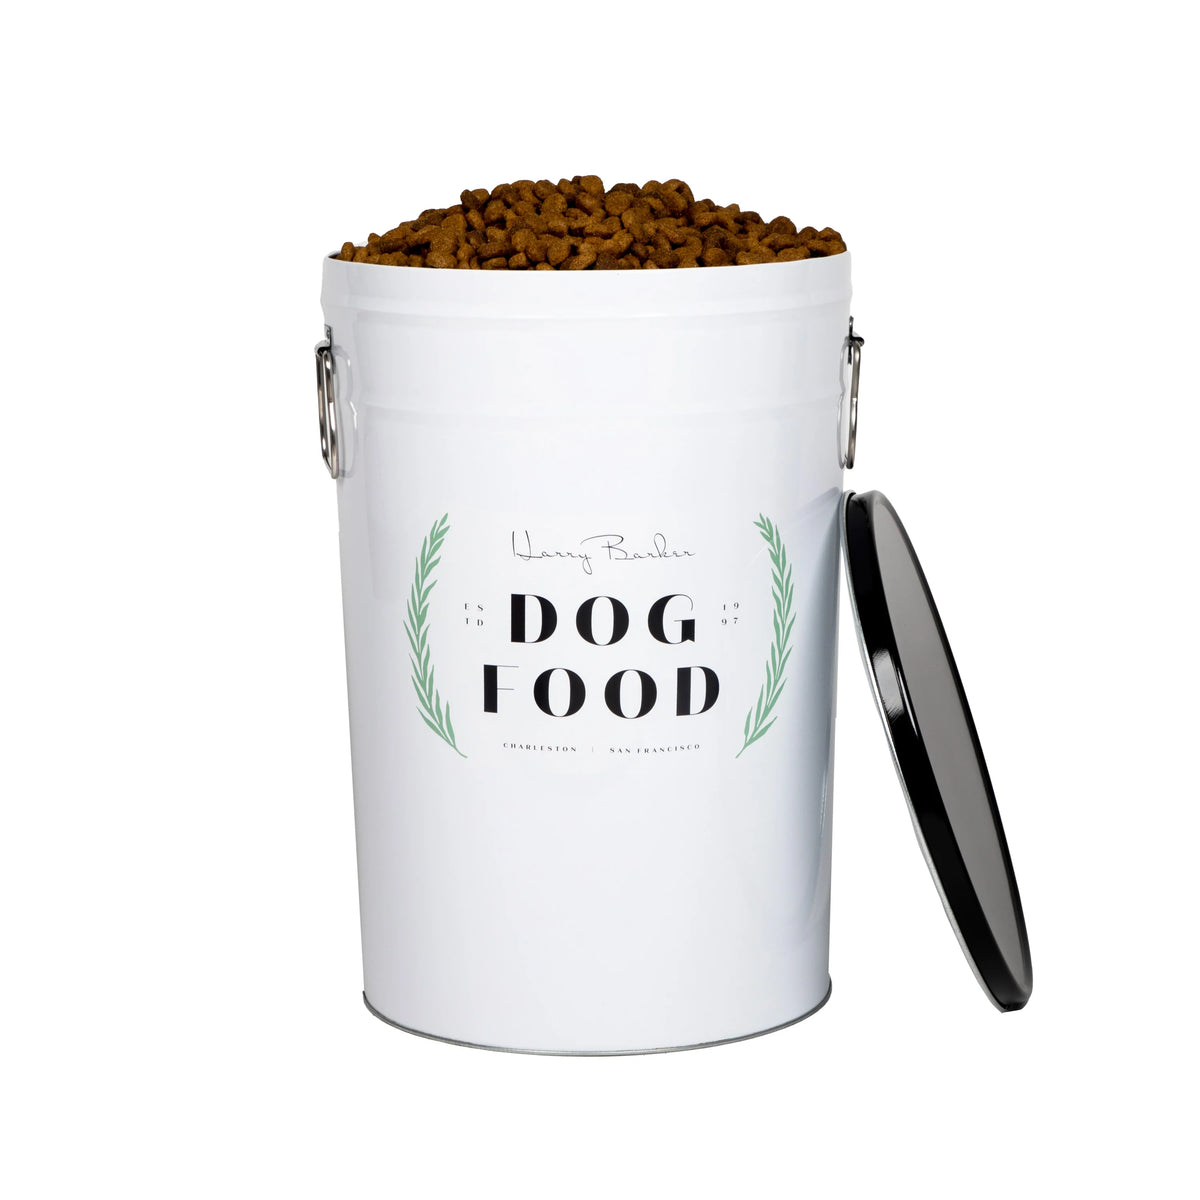 Laurel Dog Food Storage Canisters - 3 Sizes